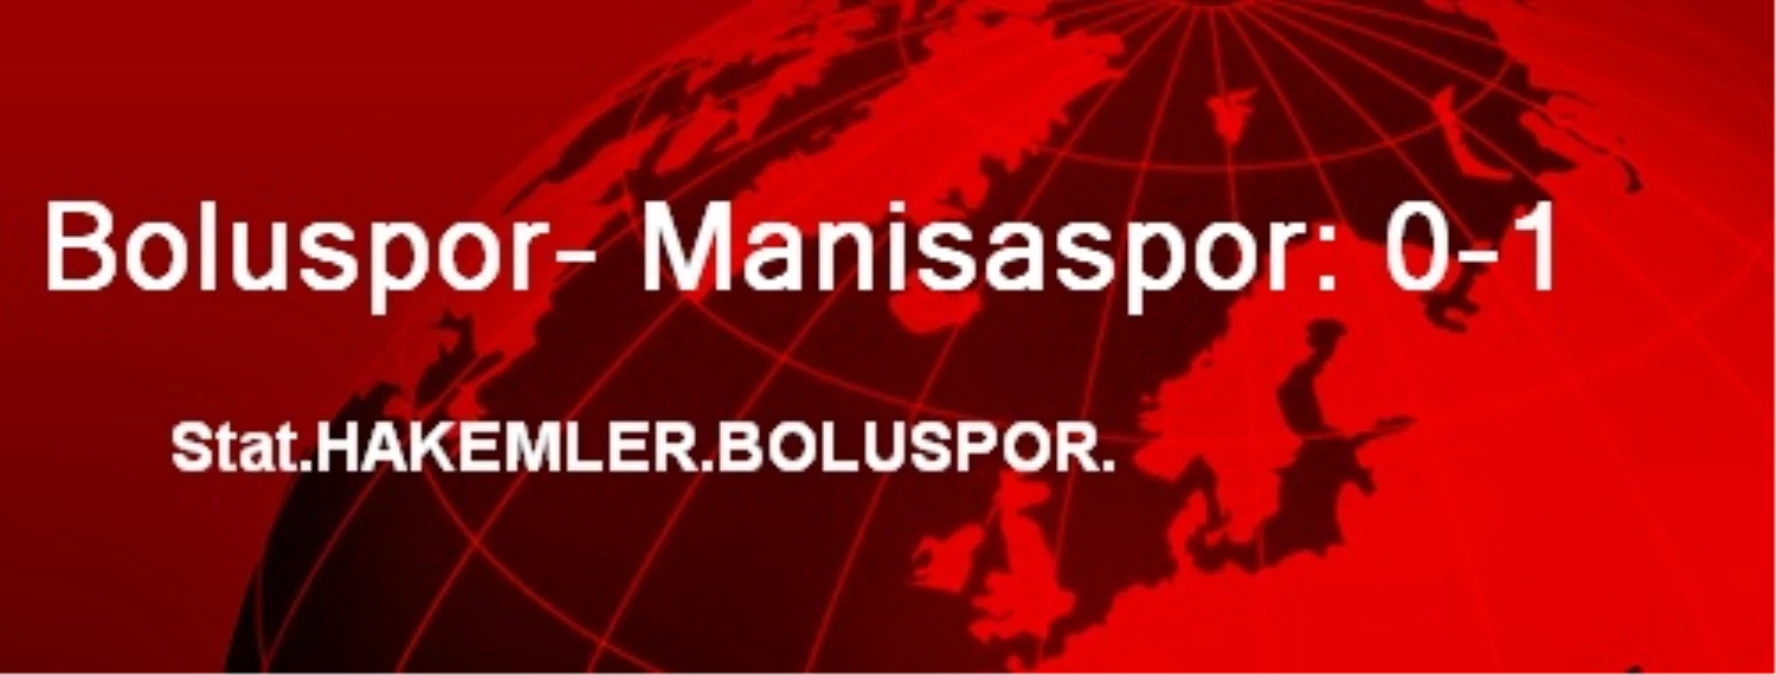 Boluspor- Manisaspor: 0-1